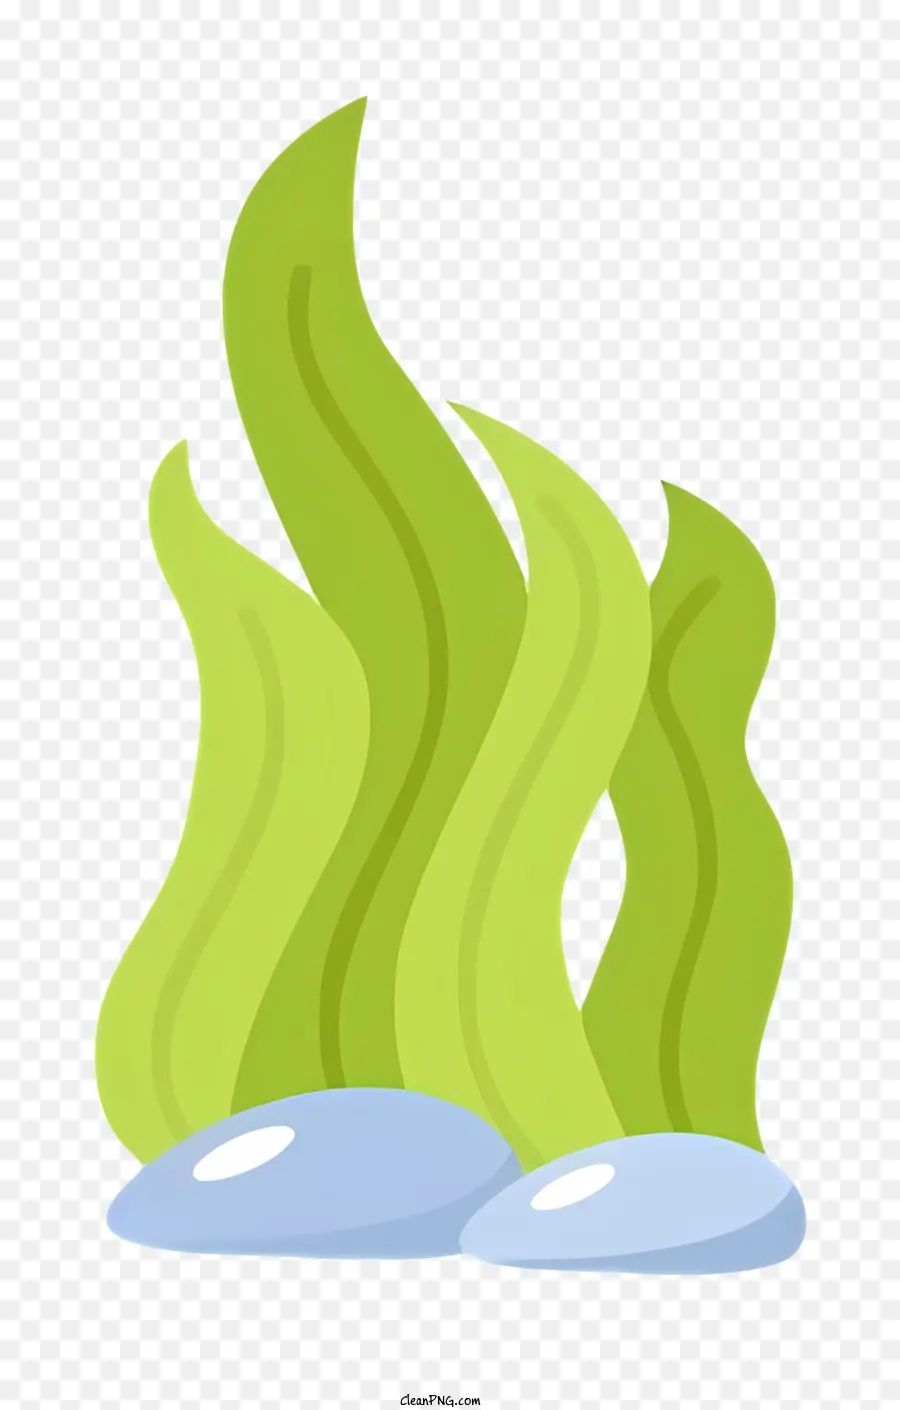 cartoon green flame glowing fire floating flame cartoon-like fire